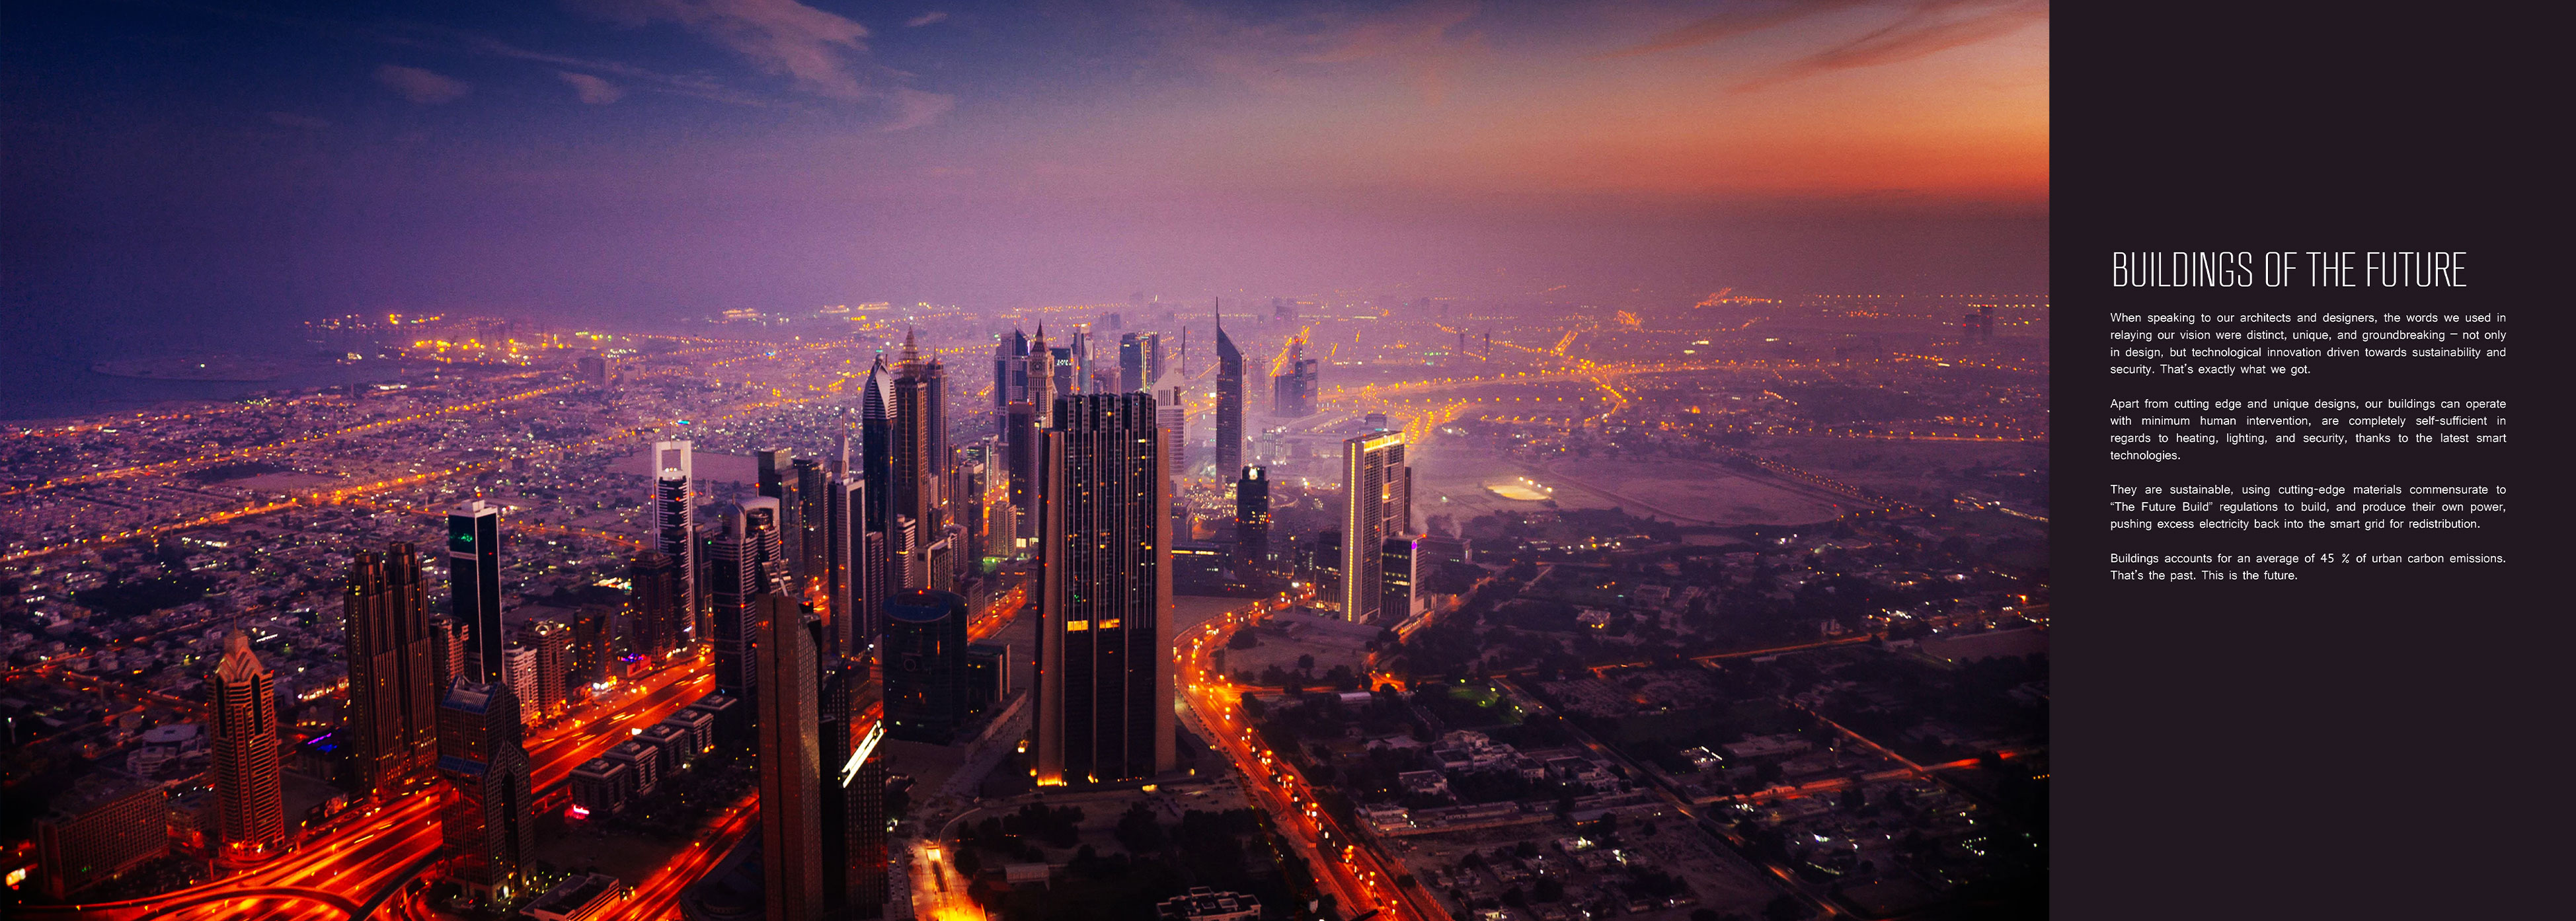 The skyline of Abu Dhabi spread